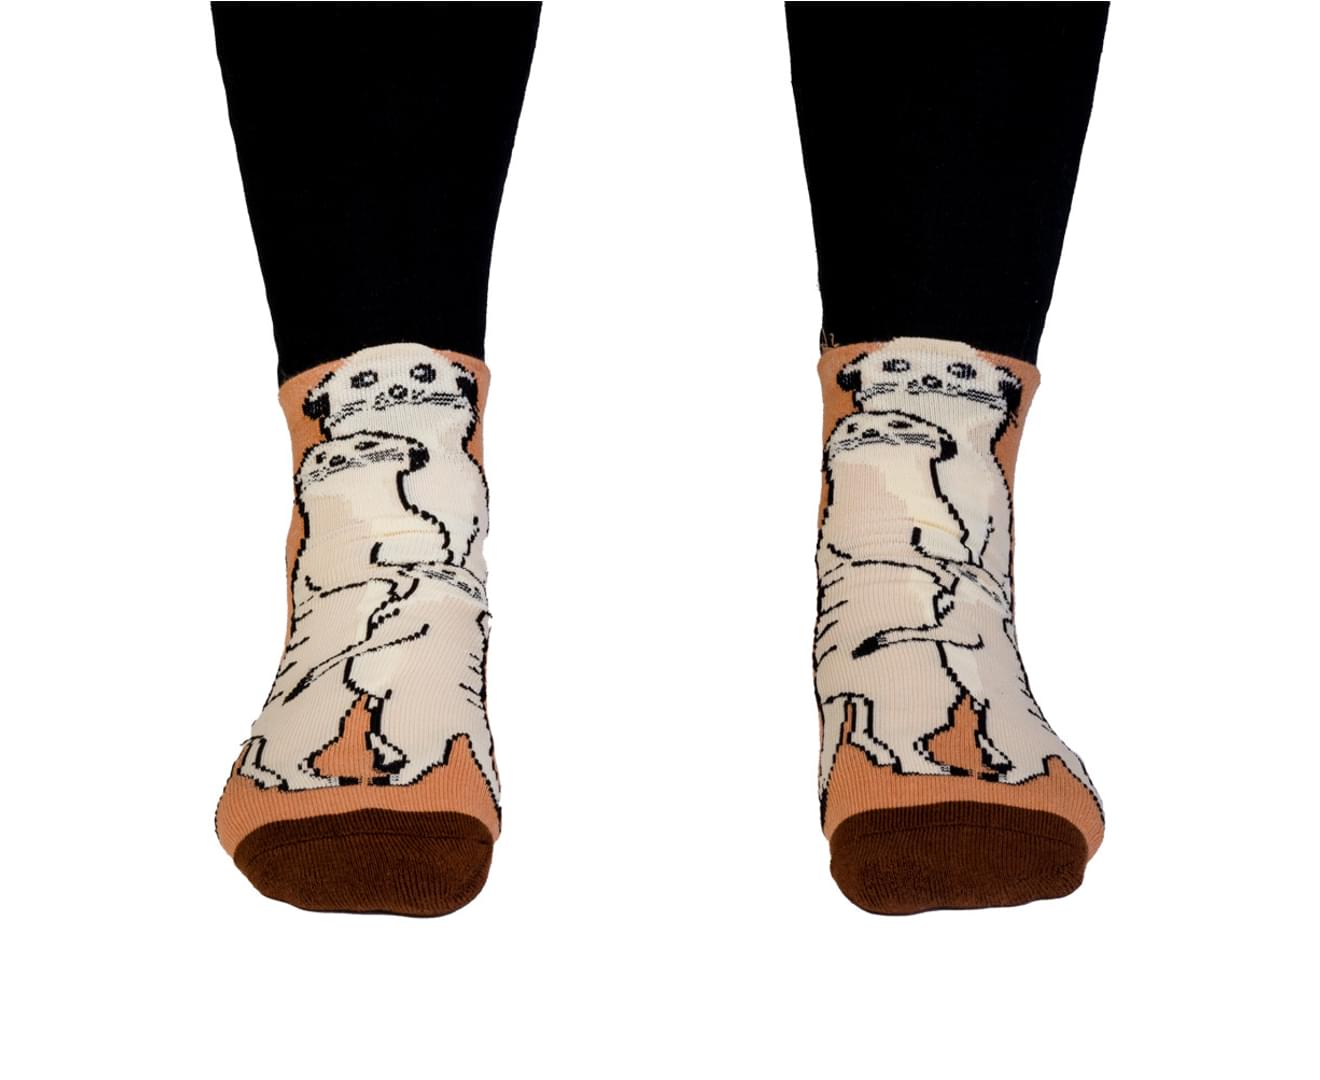 Feet speak socks Meerkat